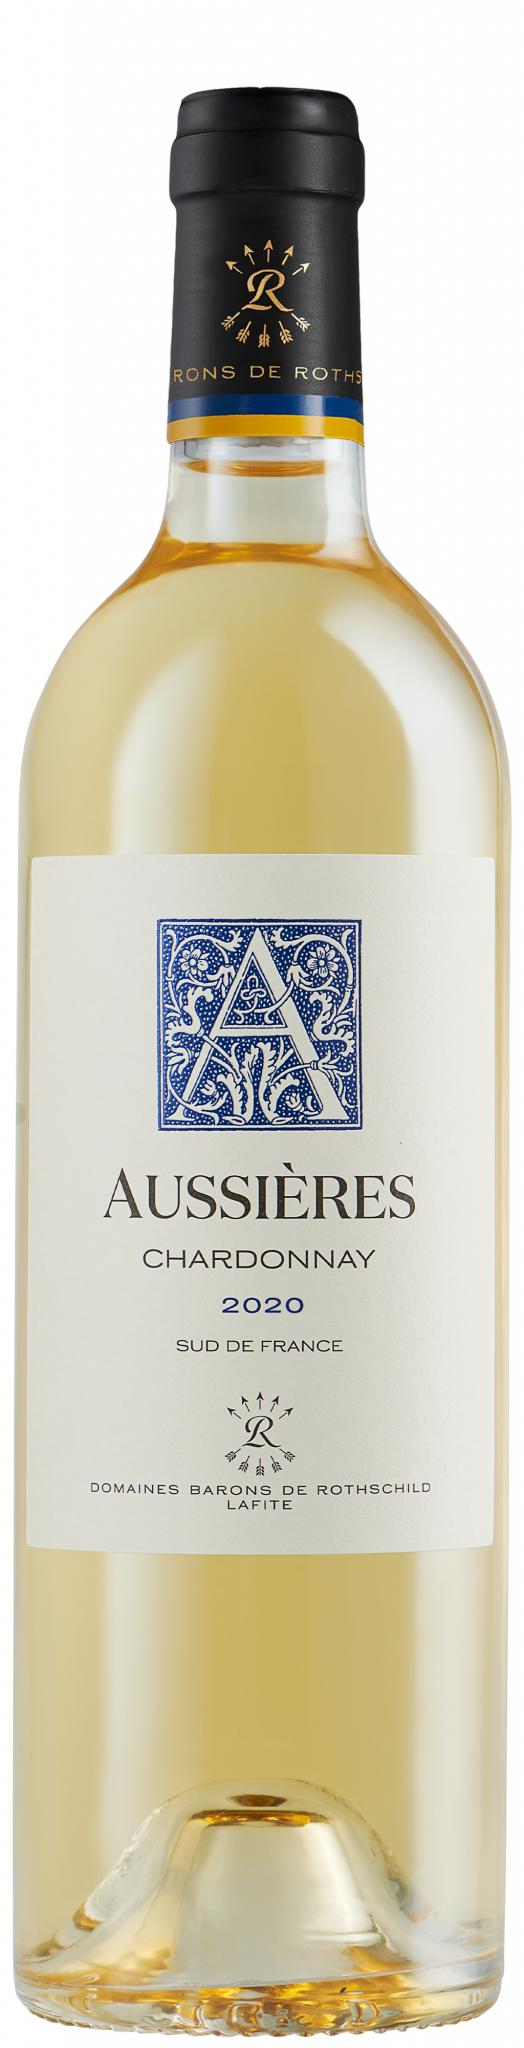 Aussières Chardonnay